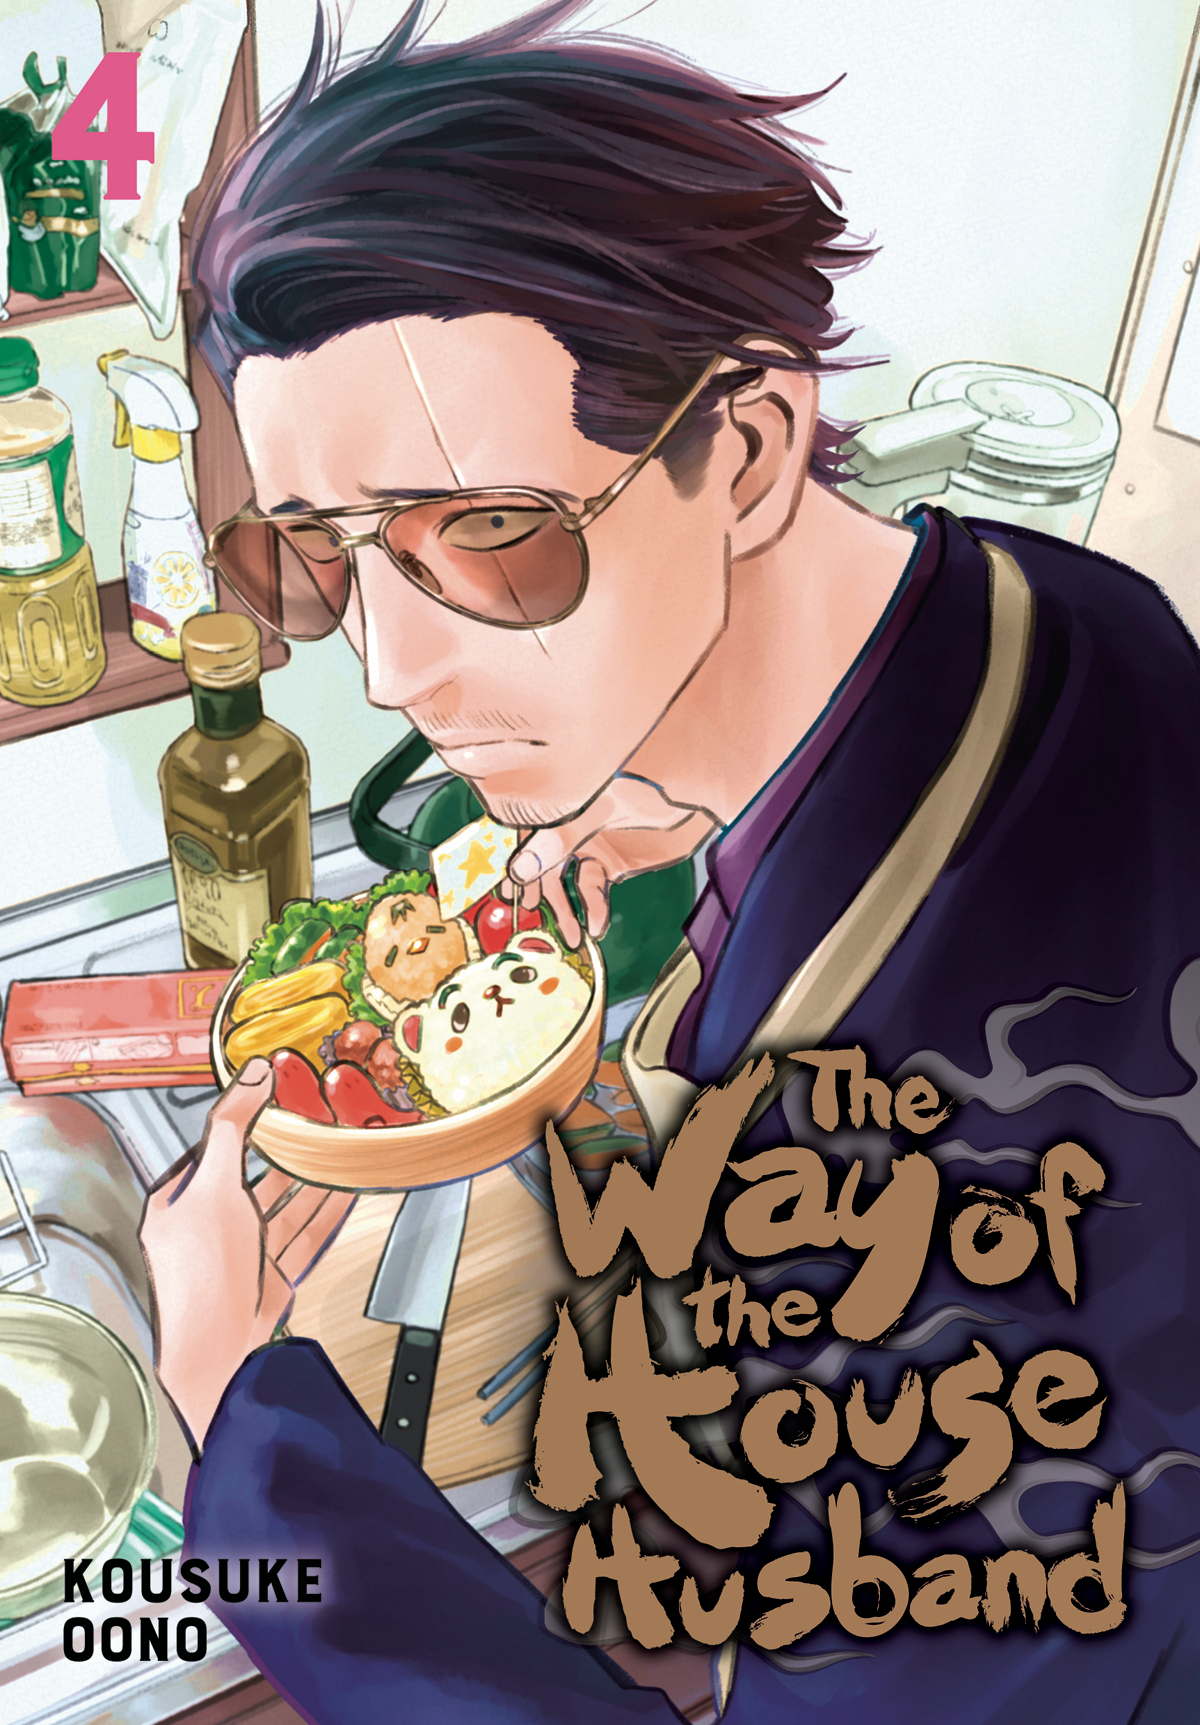 Way of the Househusband Manga Volume 4